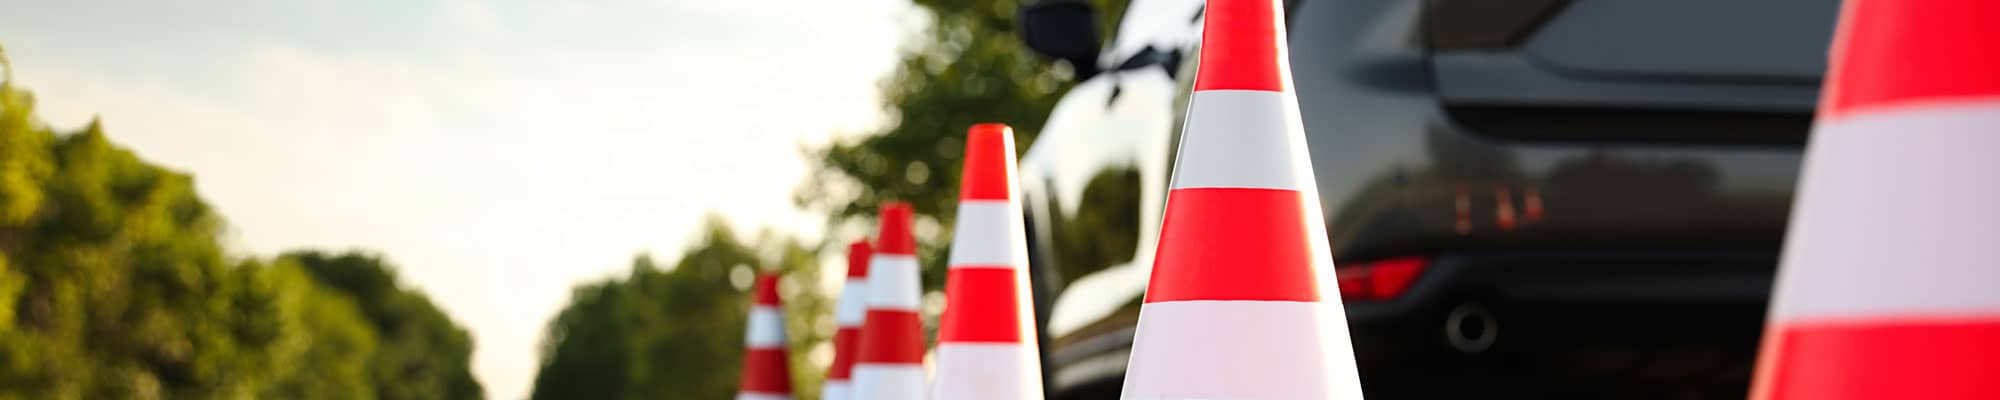 Learner driver navigating road cones in Wrexham